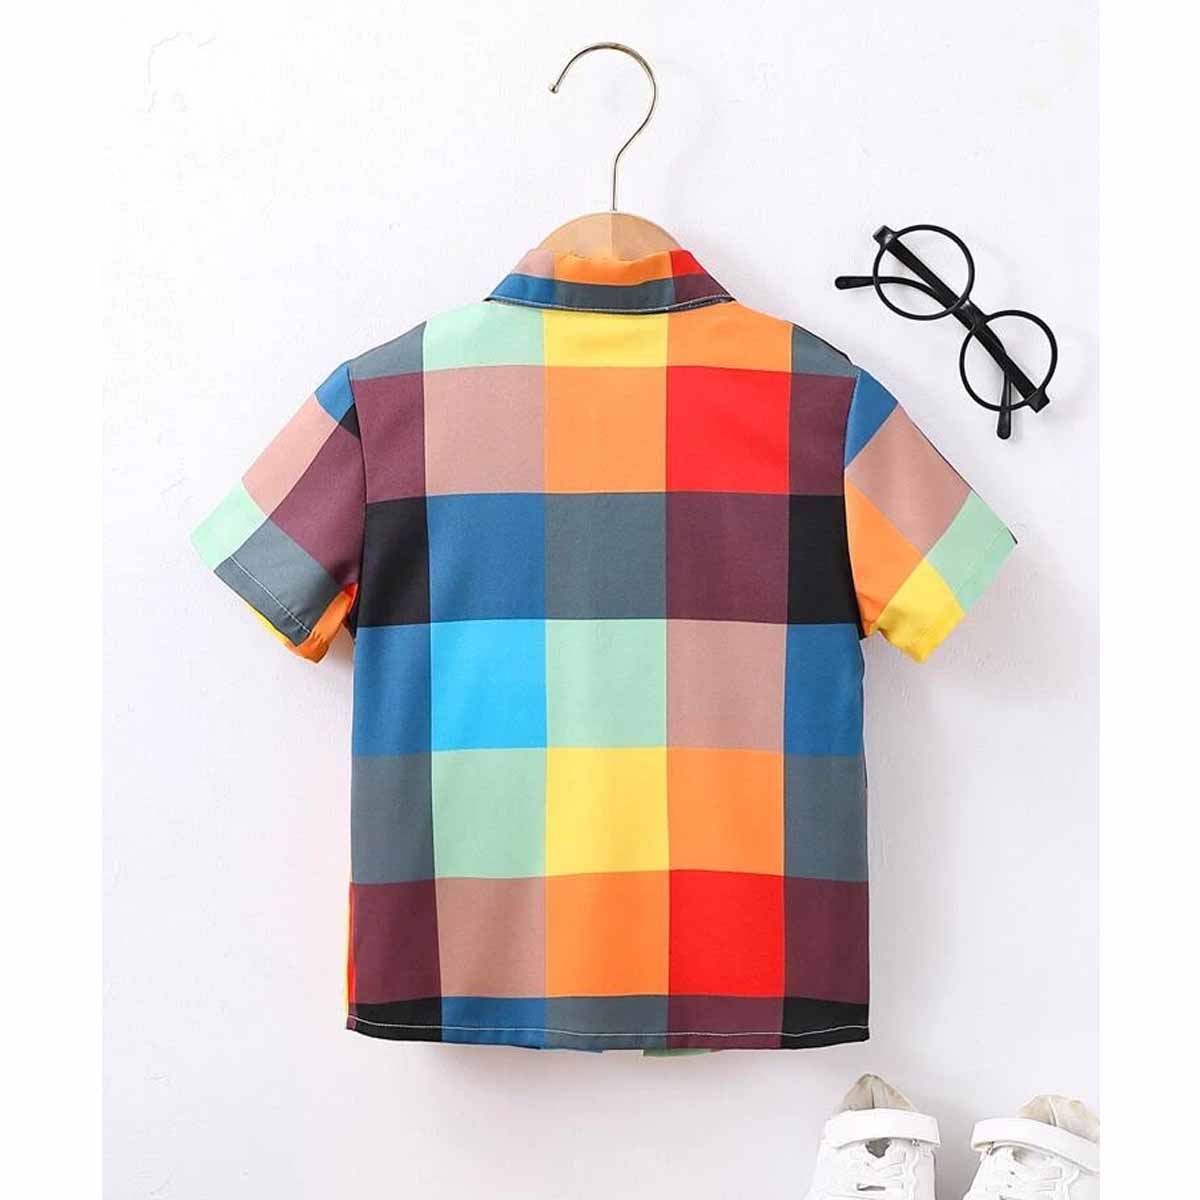 Venutaloza Stylish Multicolors Colourful Graphic Designer Button Front ((Combo pack For 6)) Shirt For Boy.